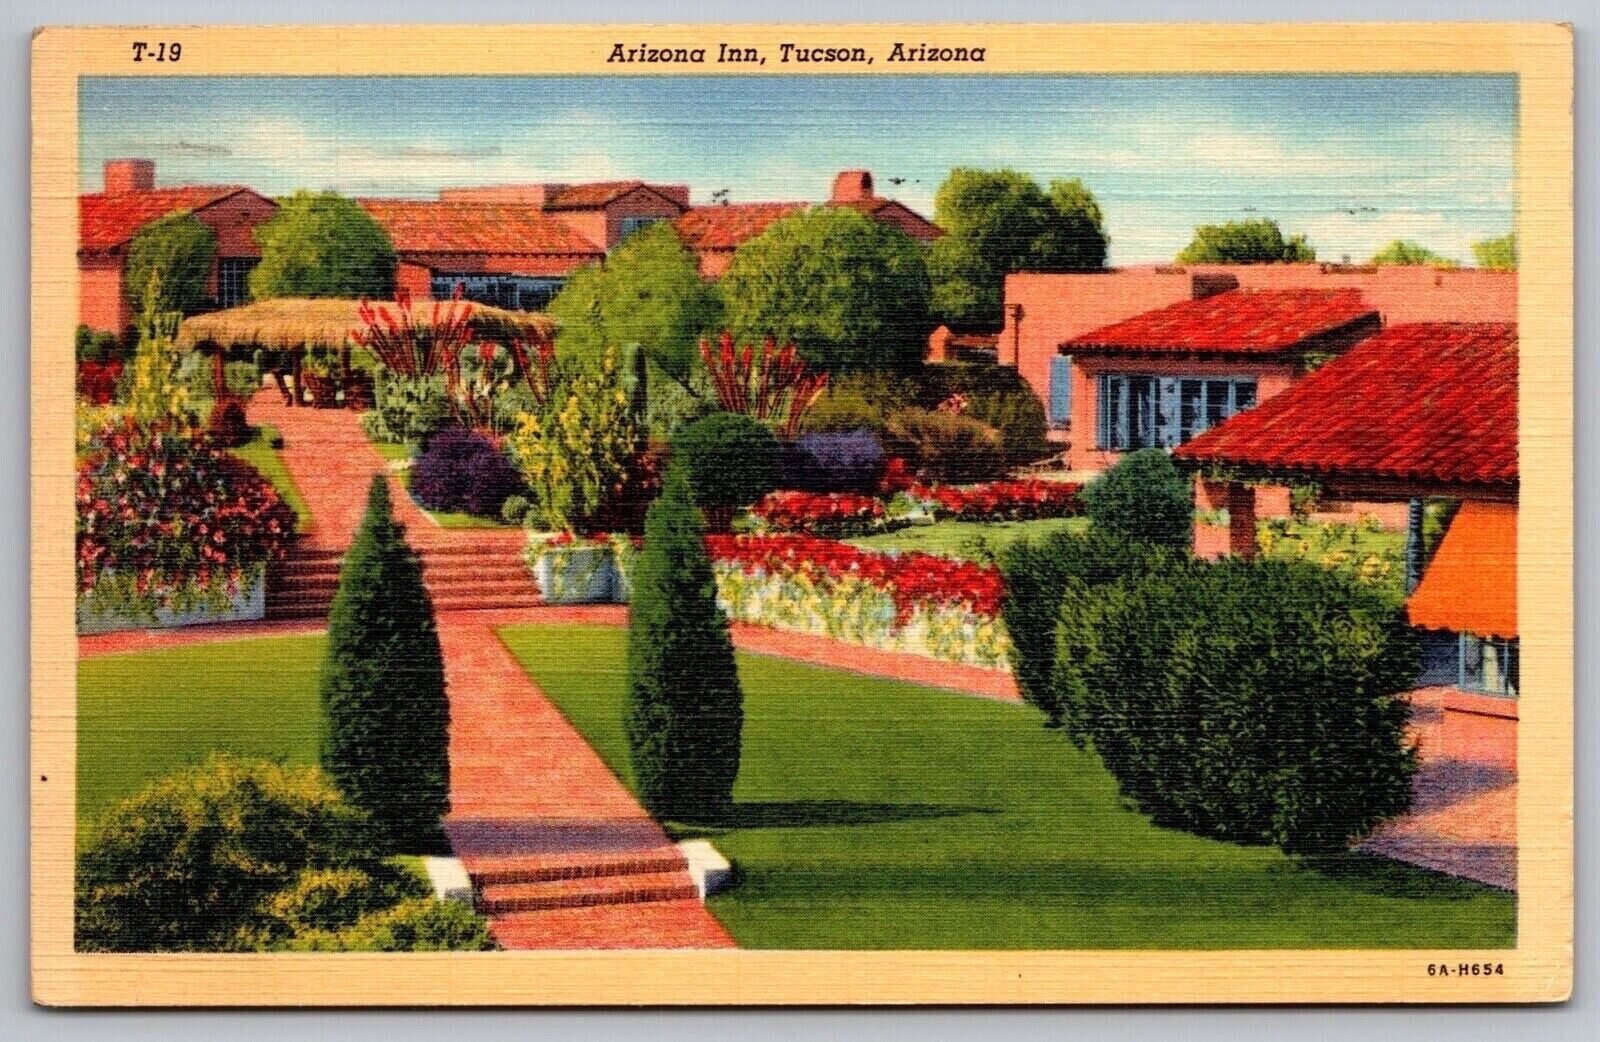 Arizona Inn Tucson Arizona Birds Eye View Flower Garden Motel Vintage Postcard